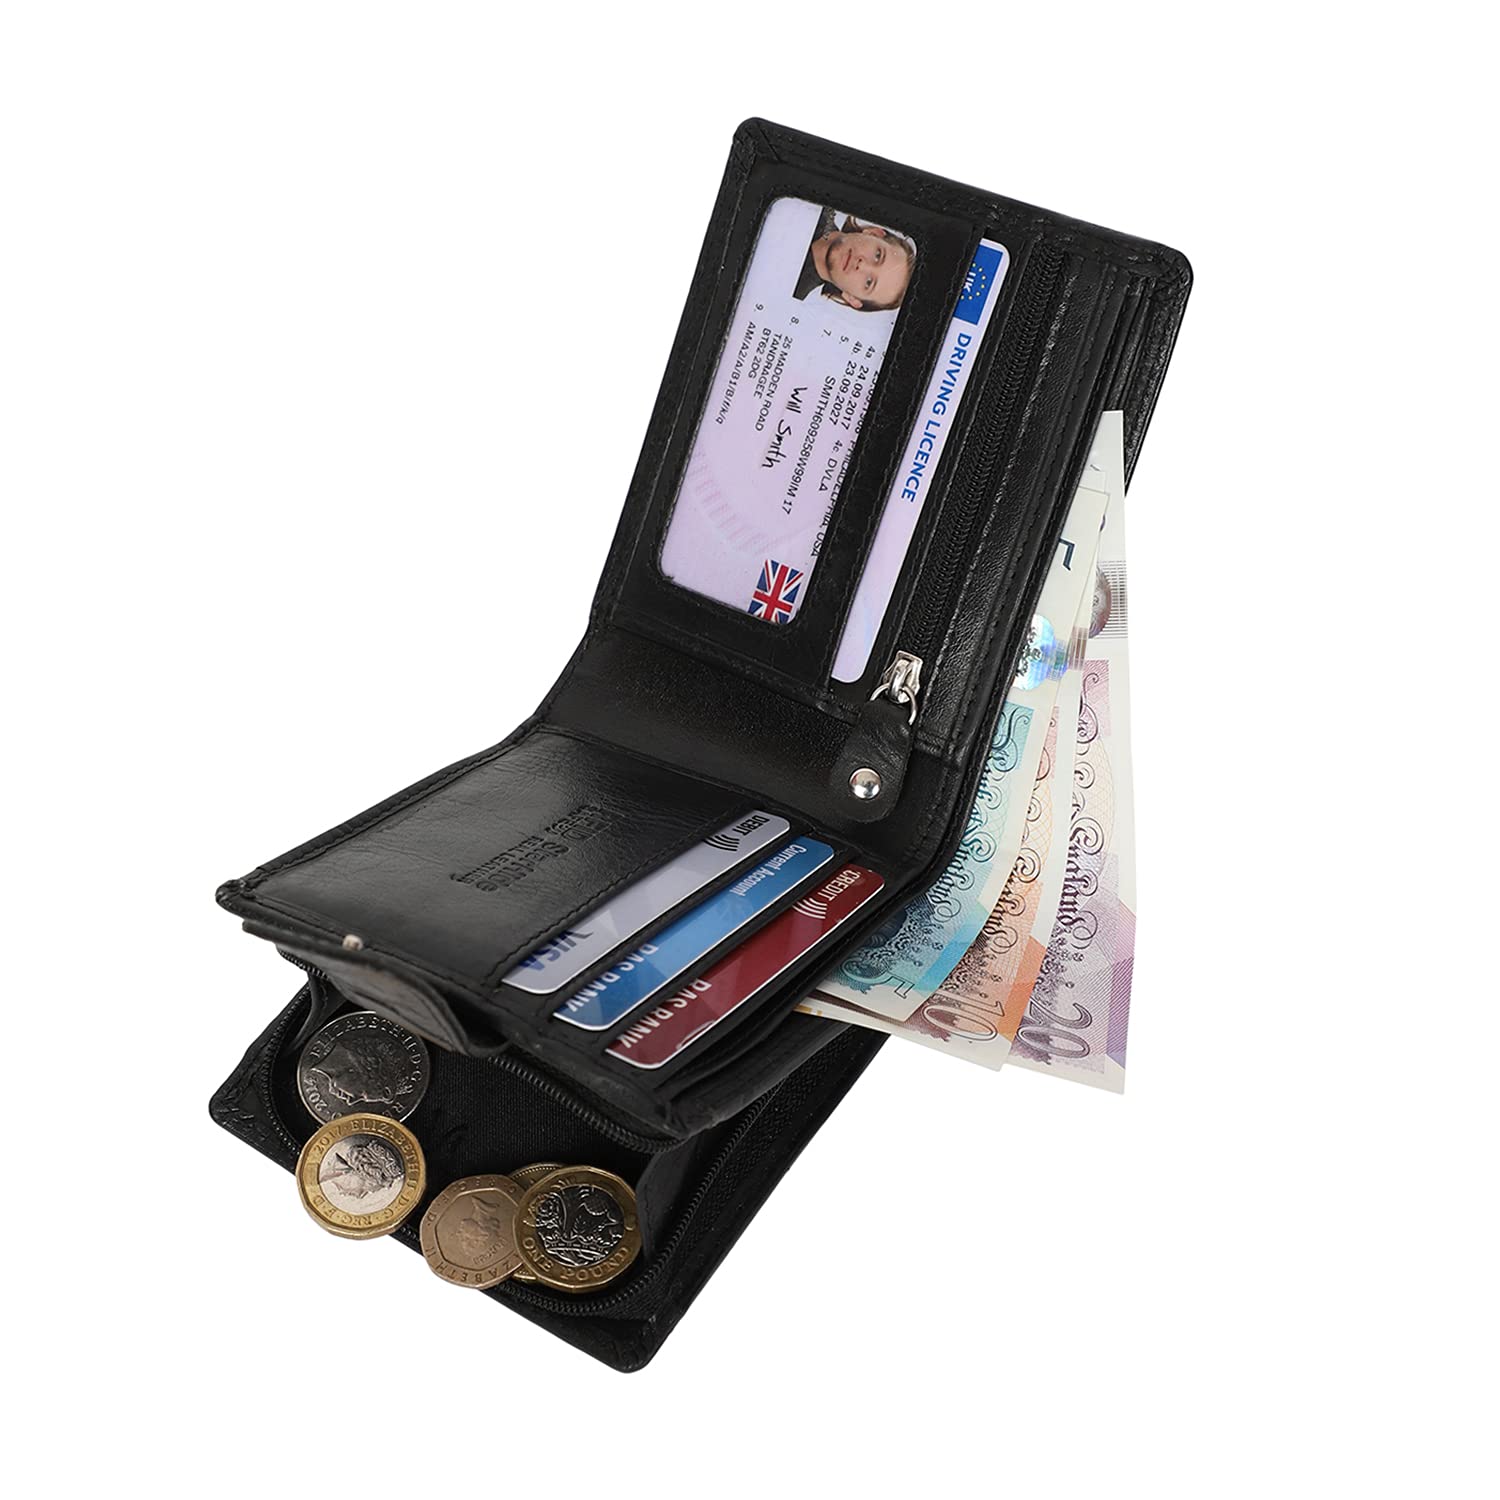 STARHIDE RFID Blocking Men's Real Leather Zipper Coin Pocket Wallet Purse - 1180